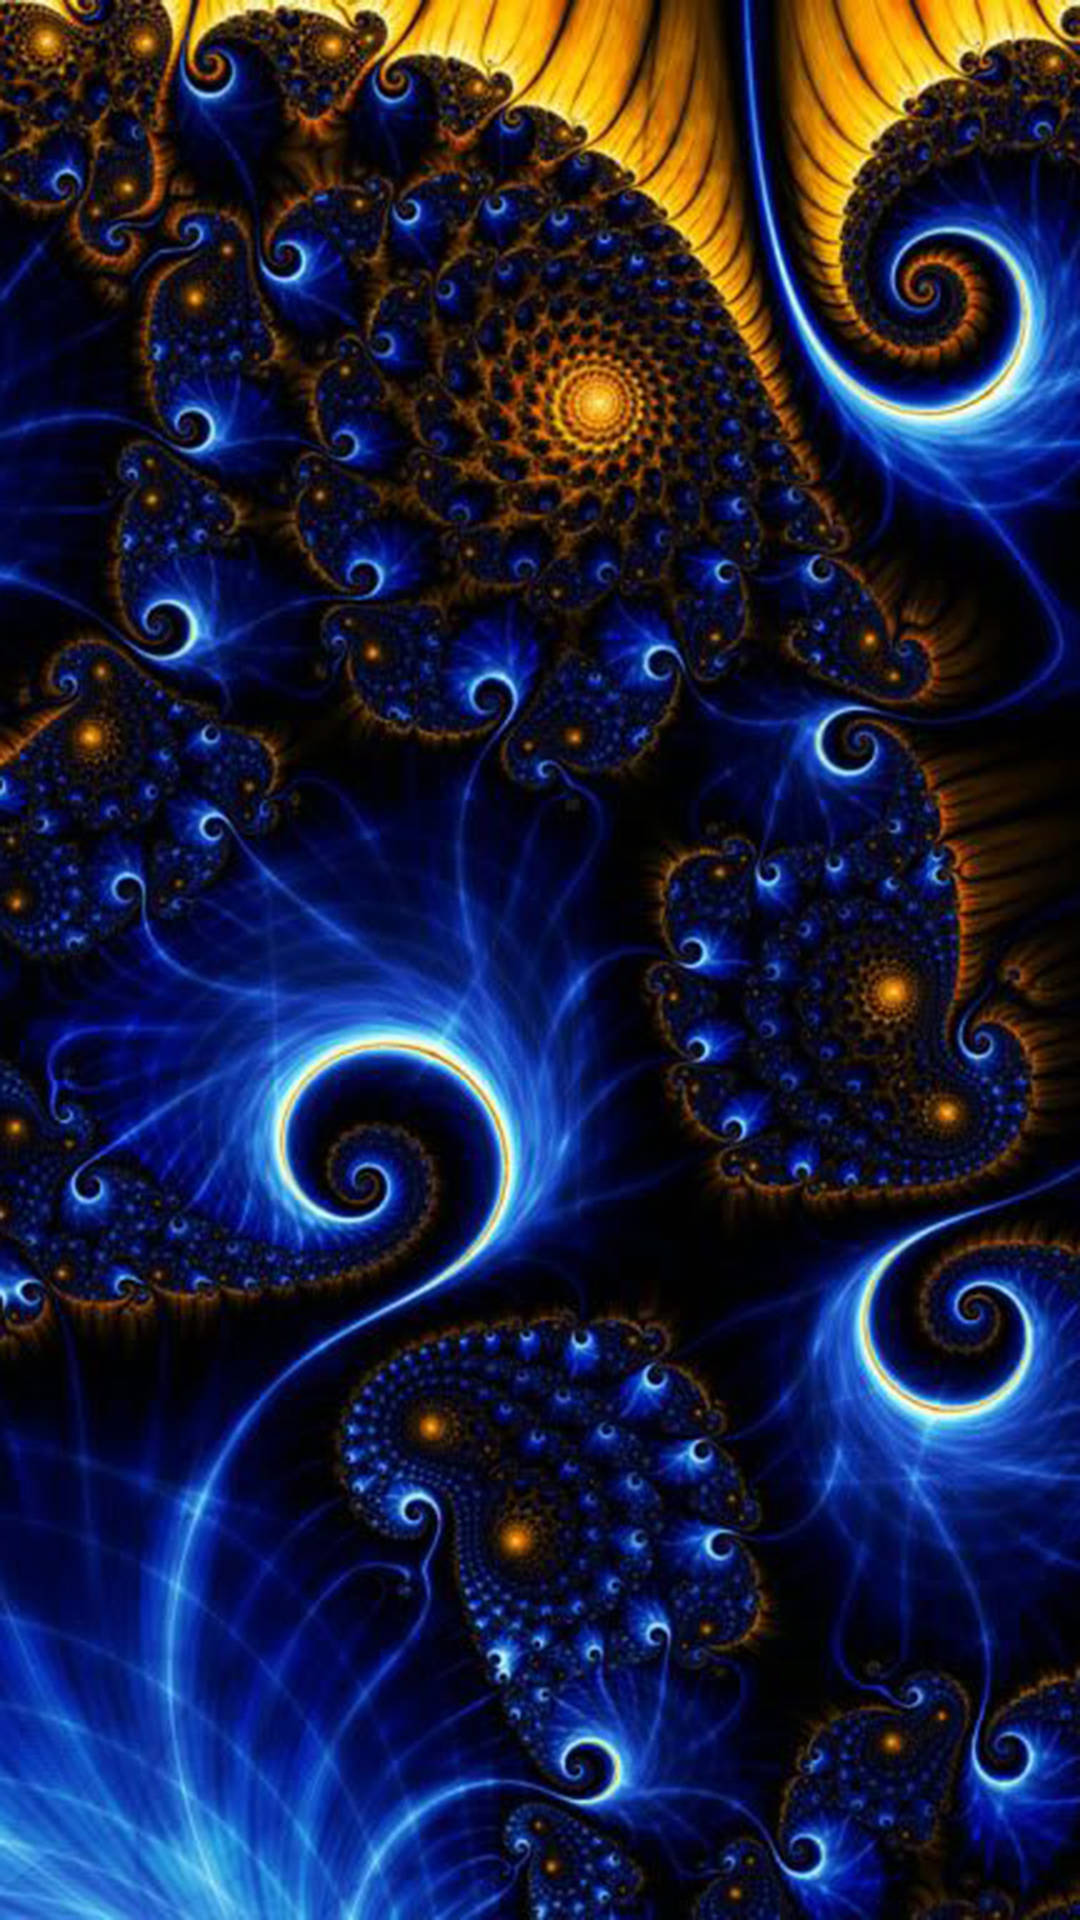 Psychedelic Peacock Spirals Iphone Wallpaper